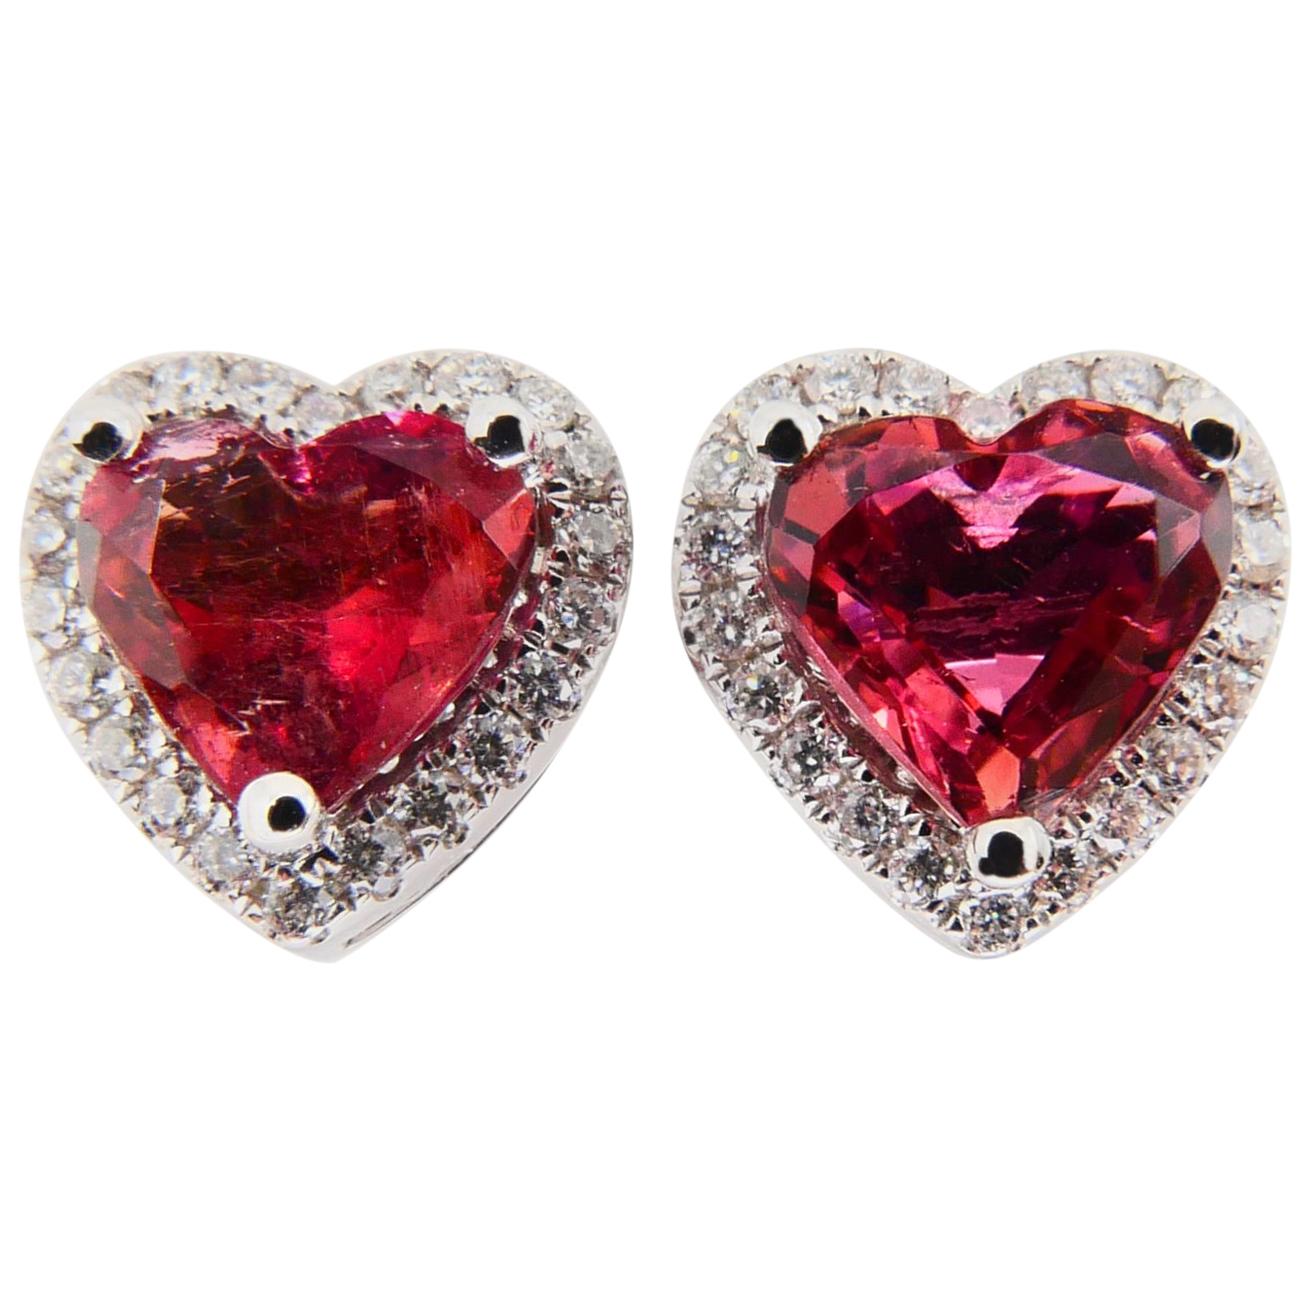 1.37 Carat Heart Shaped Vivid Pink Tourmaline and Diamond Stud Earring